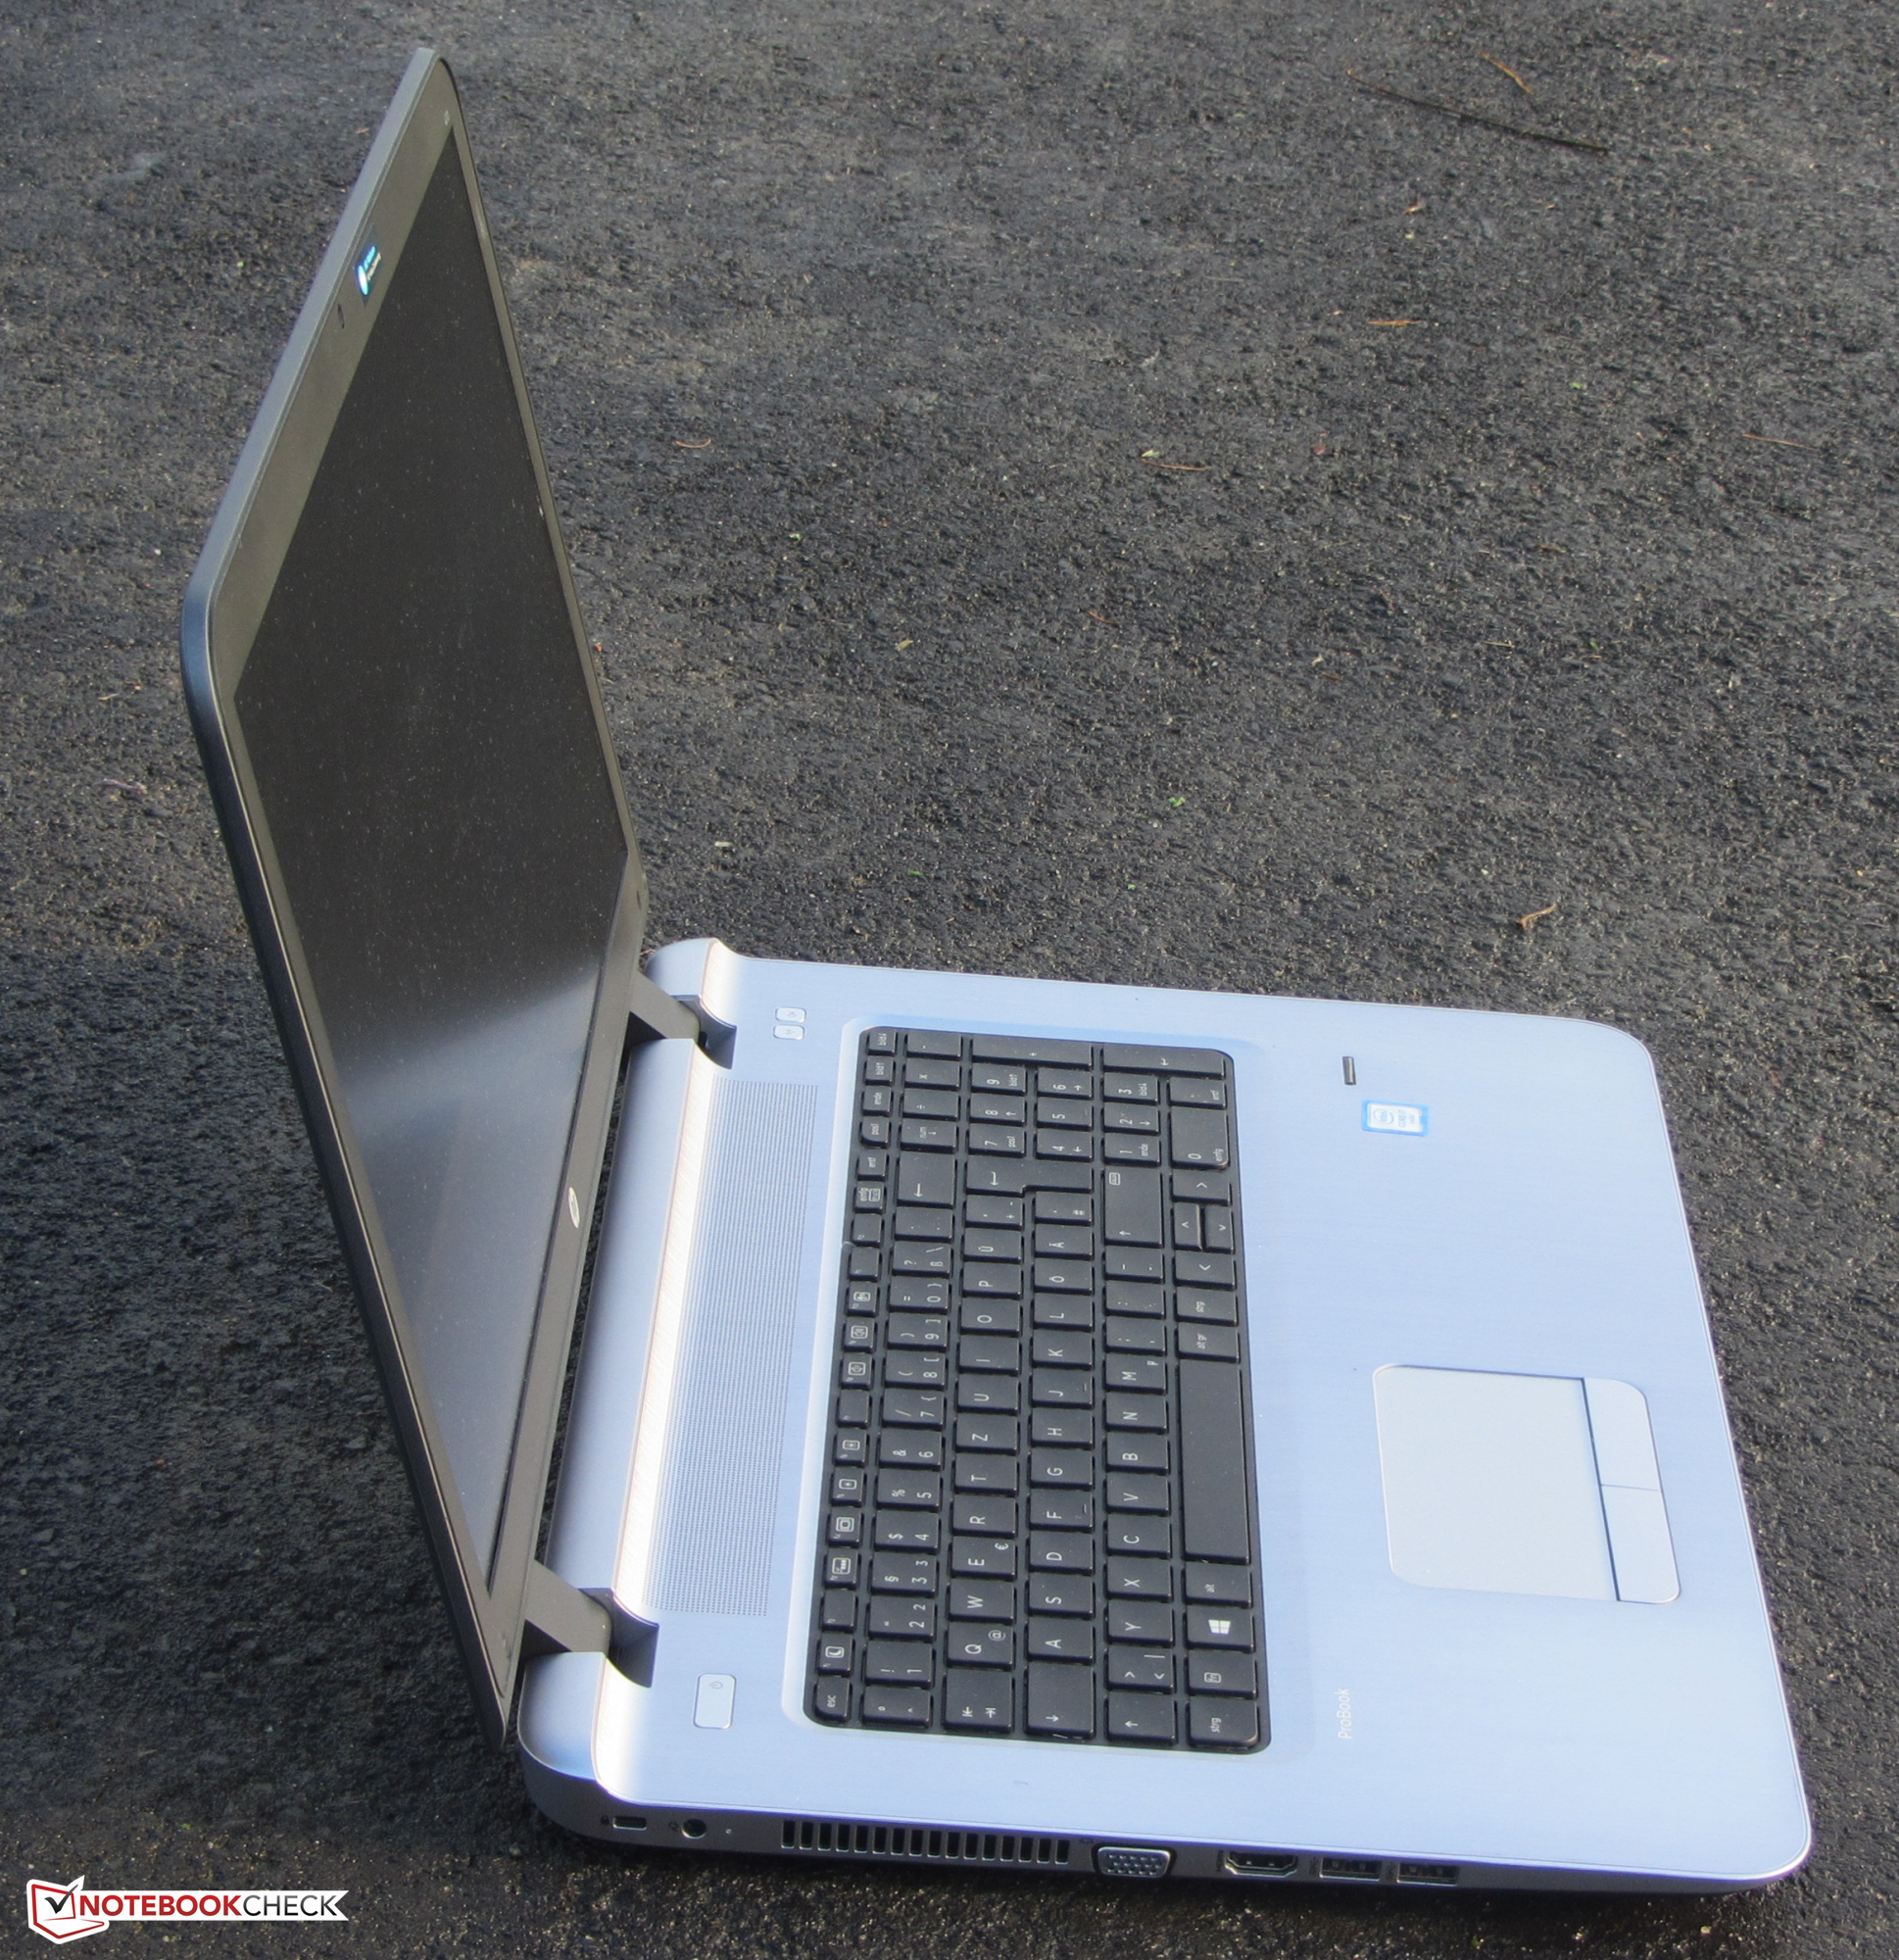 Hp Probook 470 G3 Core I7 6500u Radeon R7 M340 Notebook Review Notebookcheck Net Reviews